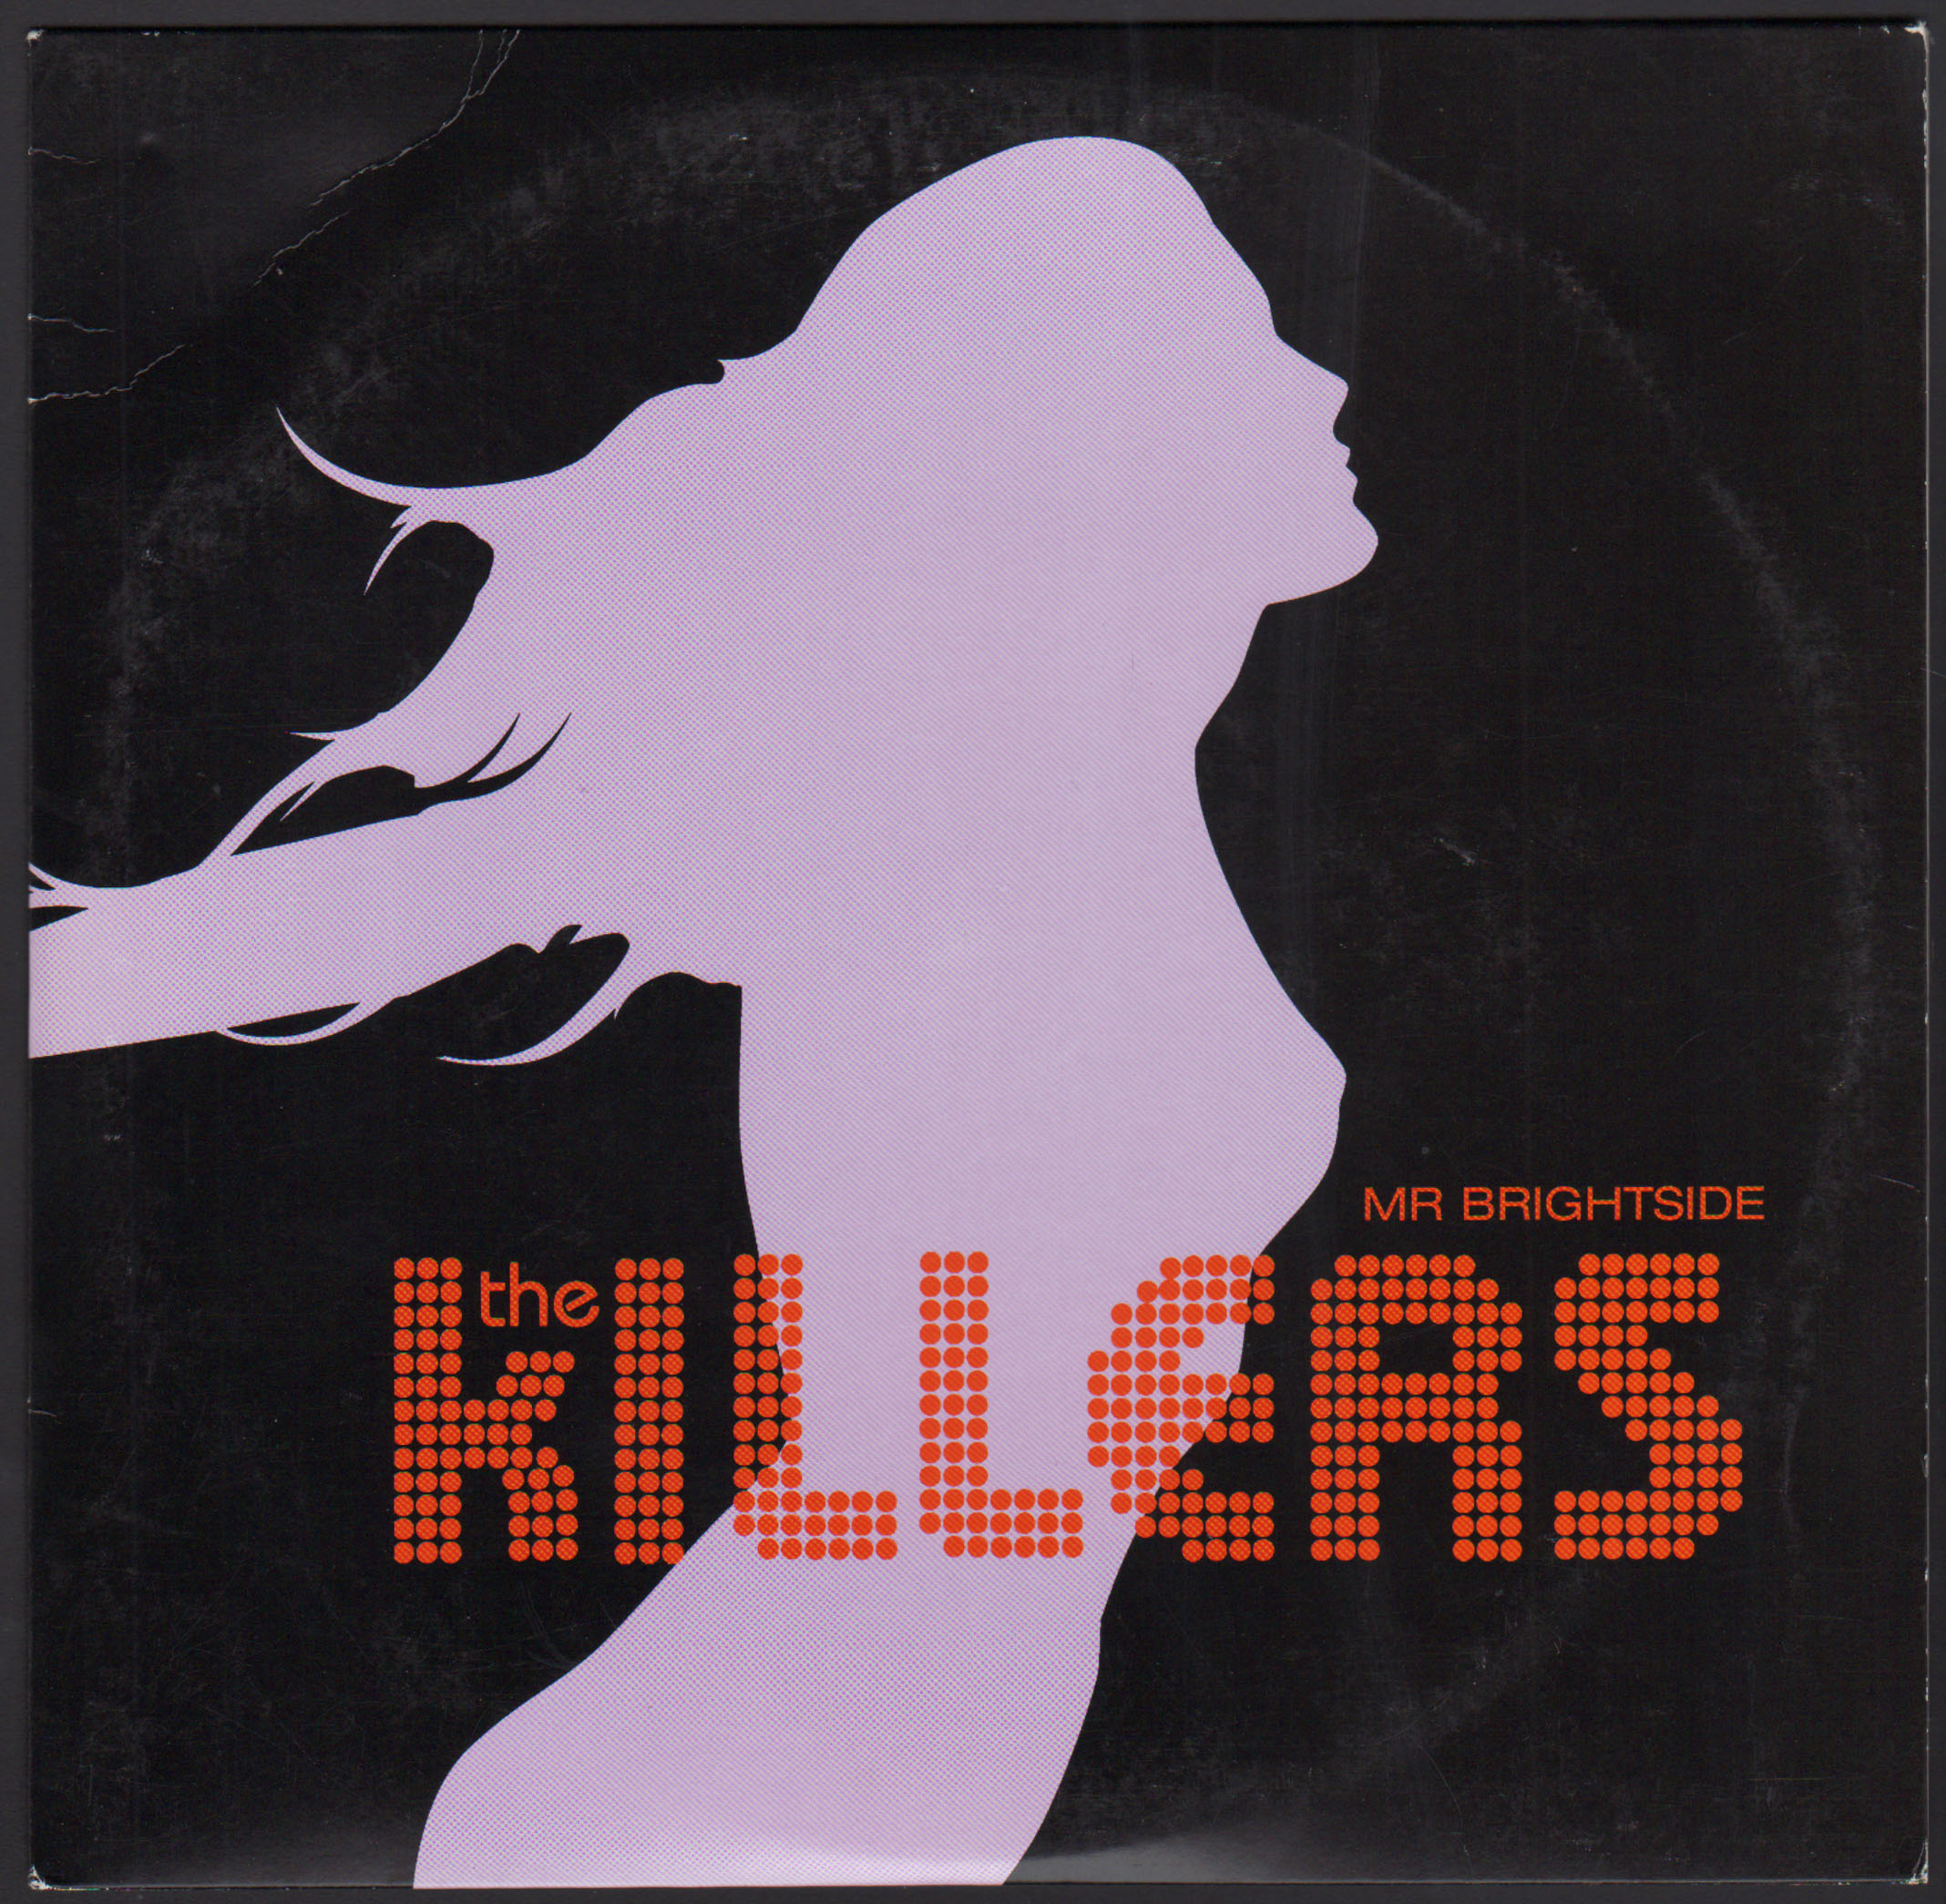 Killers brightside перевод. The Killers обложка. The Killers альбомы. The Killers обложки альбомов. The Killers Mr Brightside.